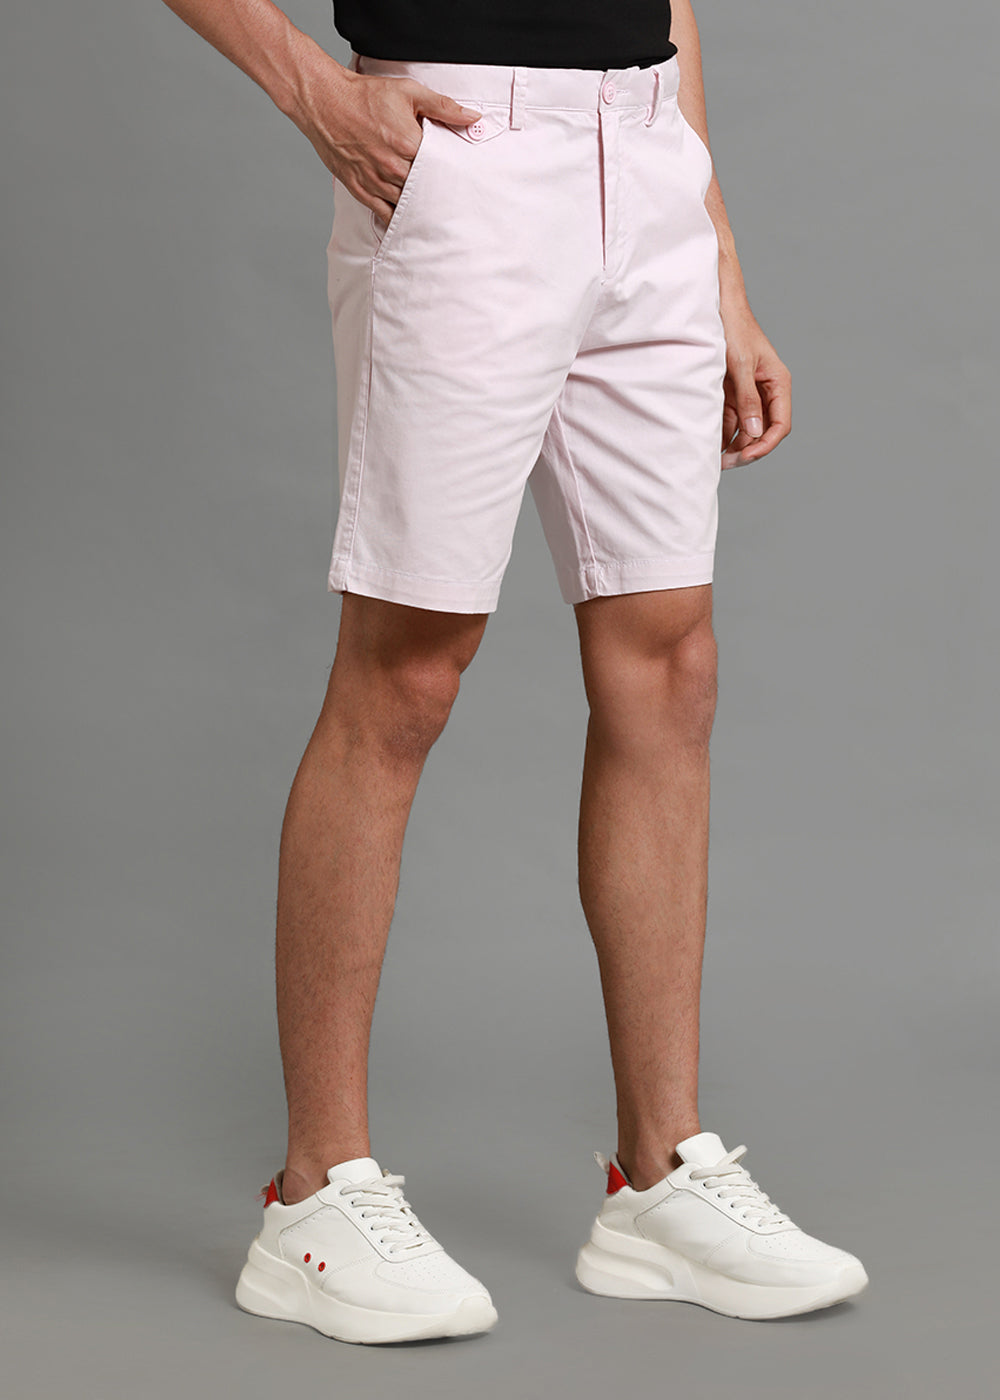 Pink Cotton Shorts